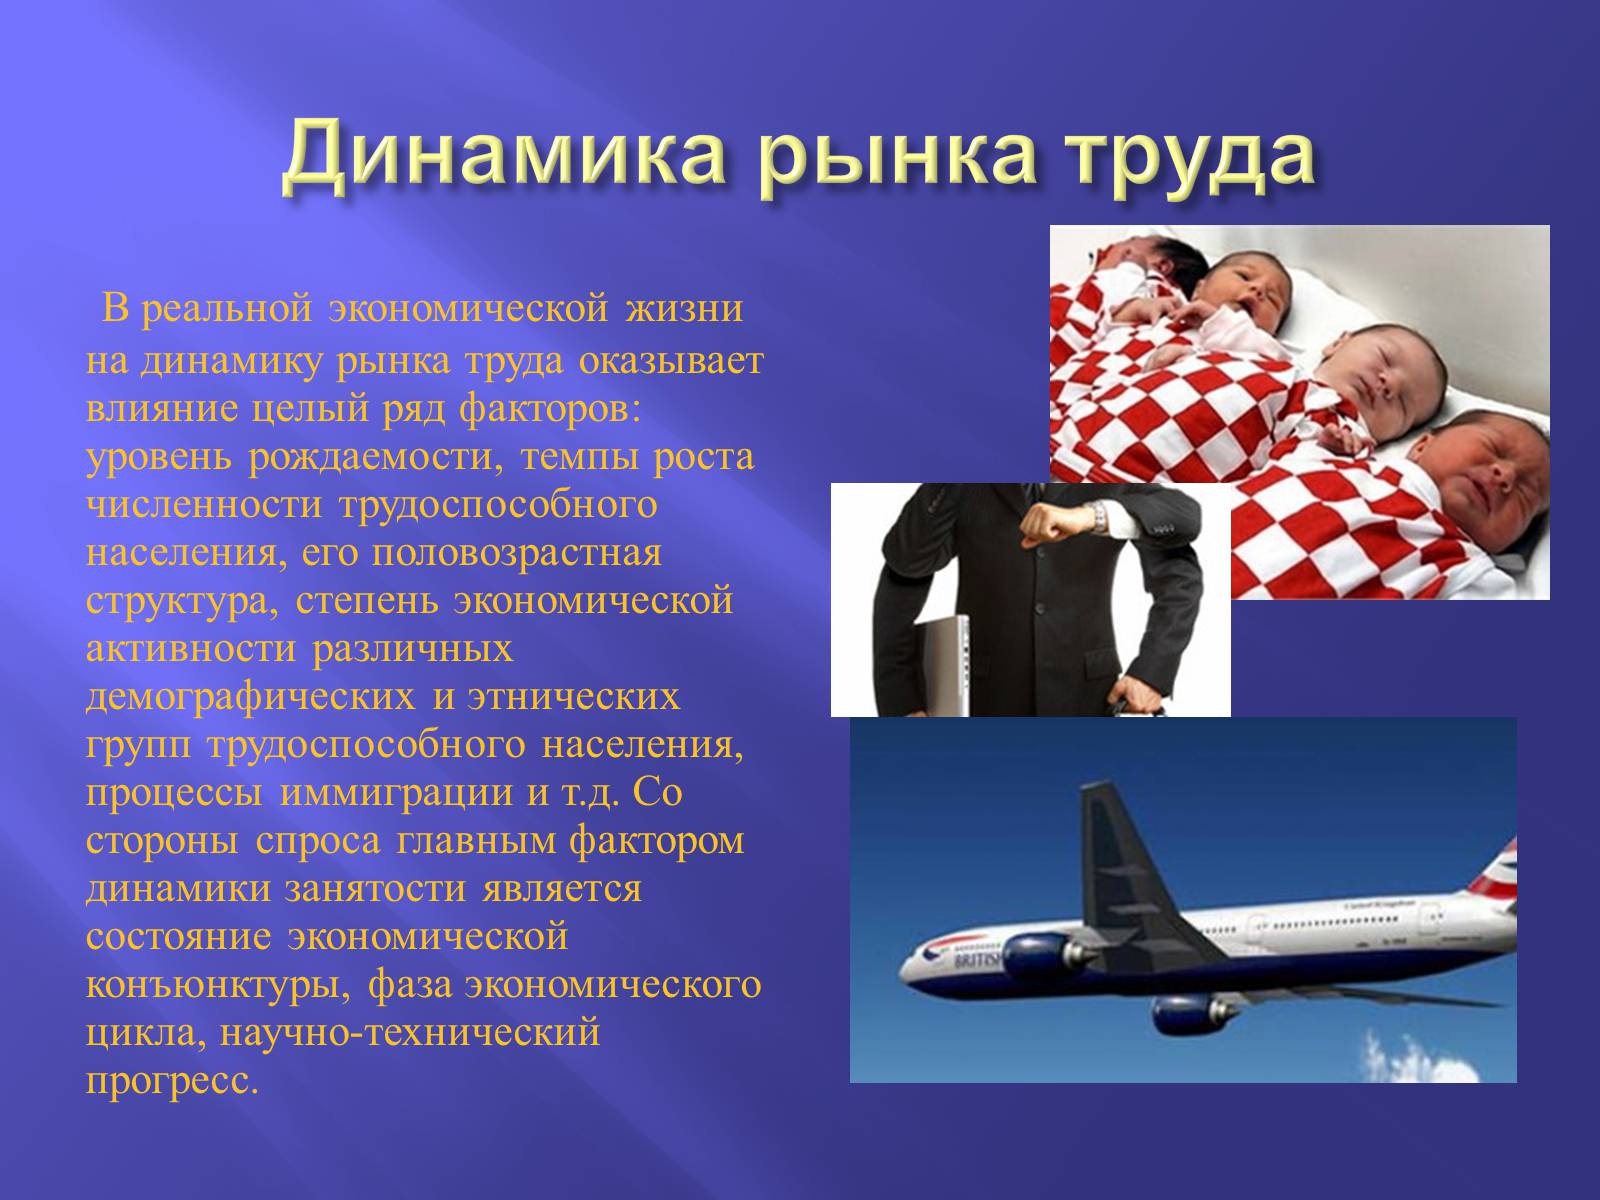 Презентація на тему «Рынок труда в Украине: проблемы становления» - Слайд #6